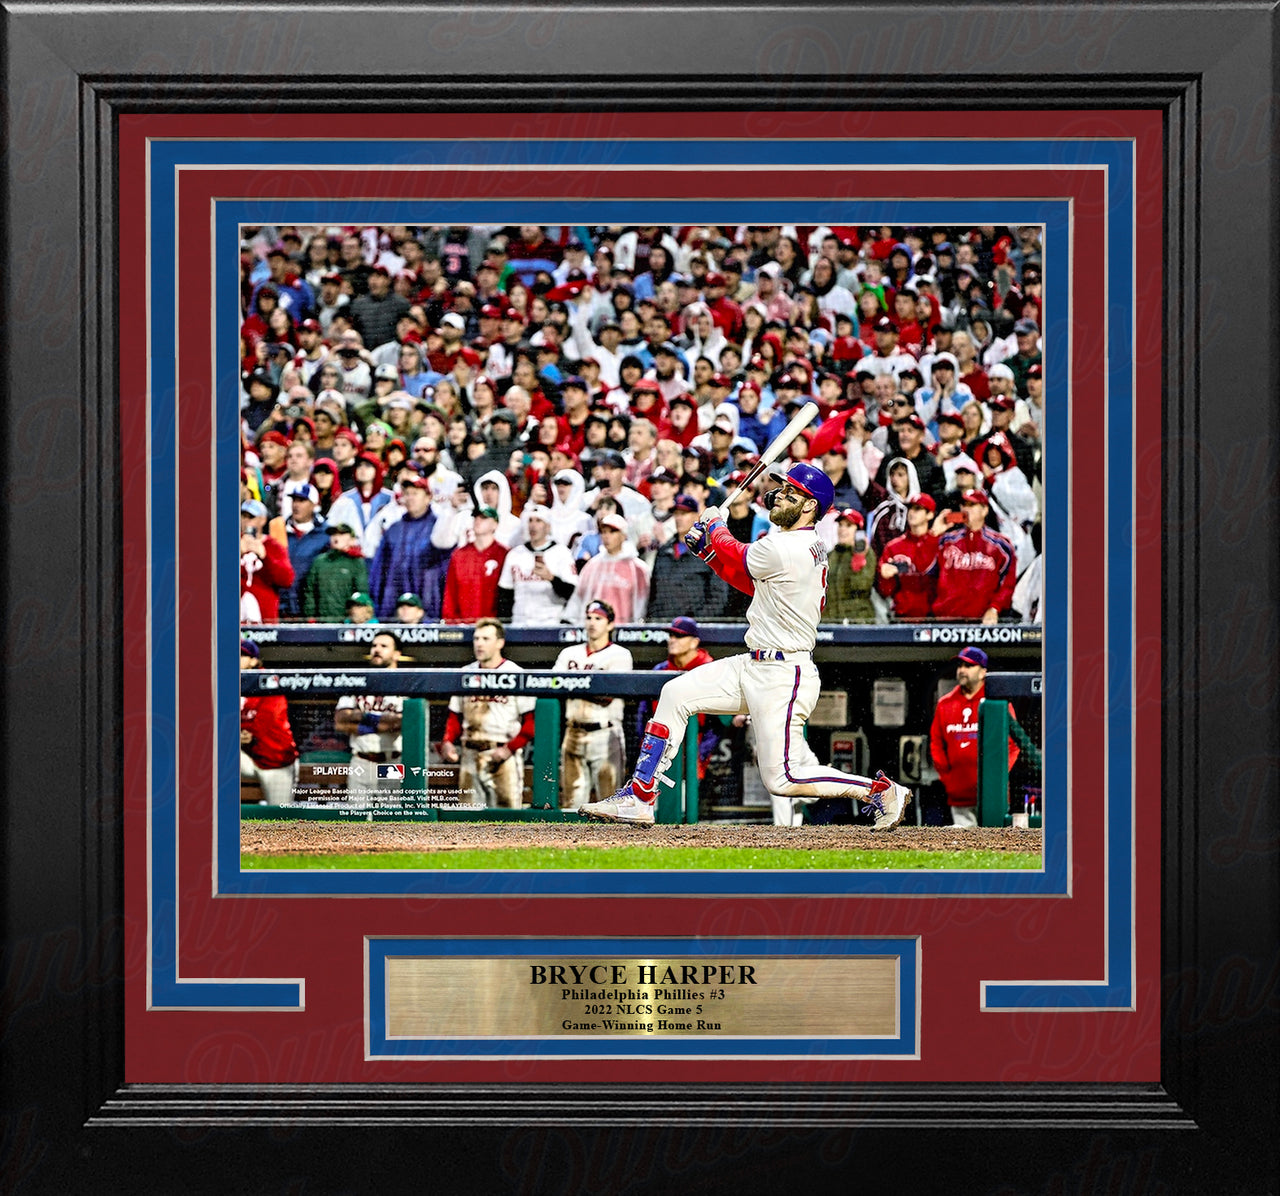 Bryce Harper 2022 NLCS Game 5 Home Run Philadelphia Phillies 8" x 10" Framed Baseball Photo - Dynasty Sports & Framing 